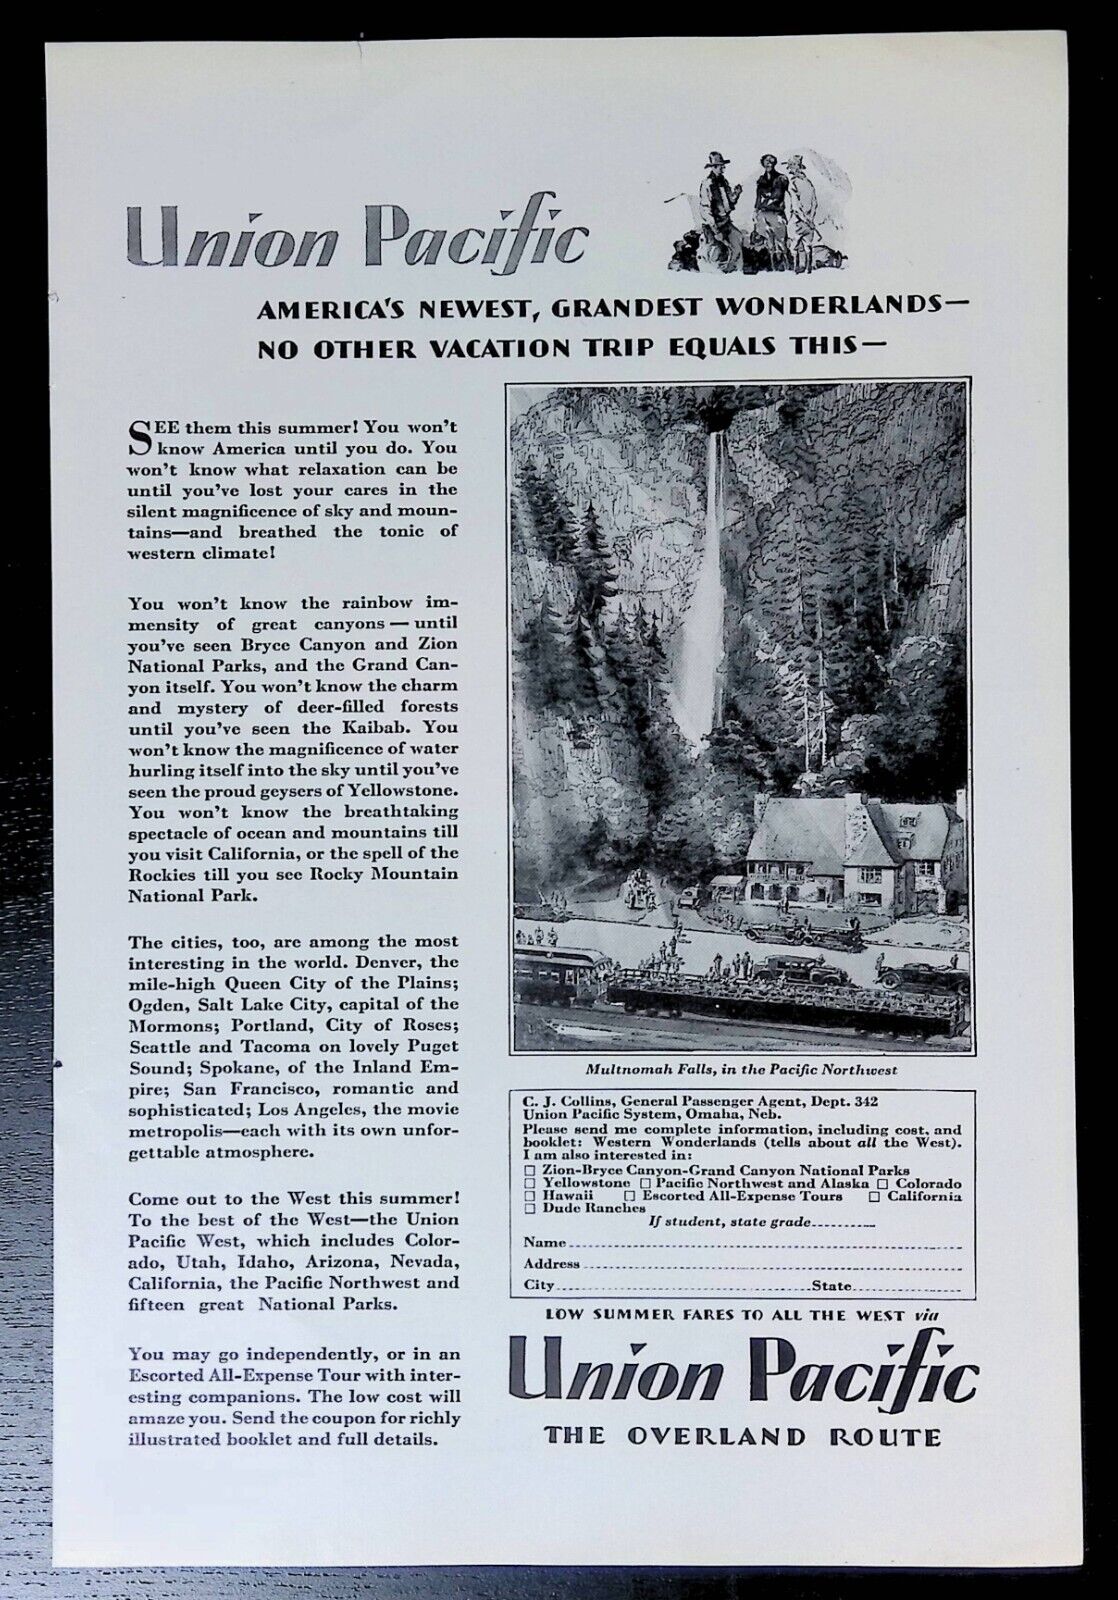 Print Ad 1929 Union Pacific Overland Route Multnomah Falls Oregon Omaha Nebraska